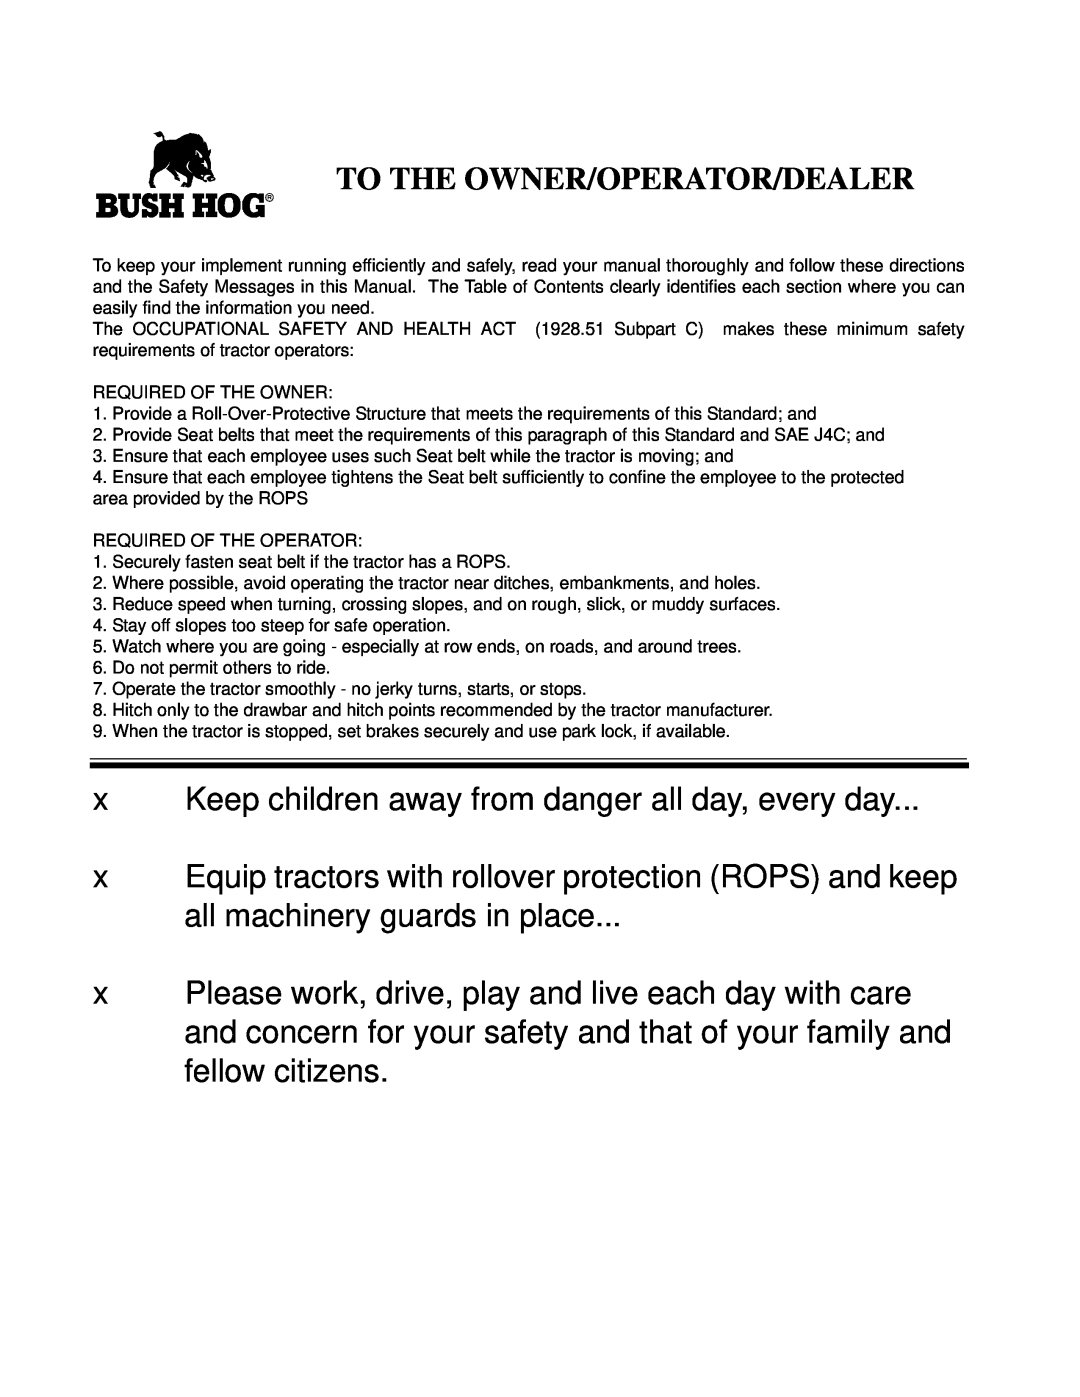 Bush Hog RMB 1865 manual To The Owner/Operator/Dealer 